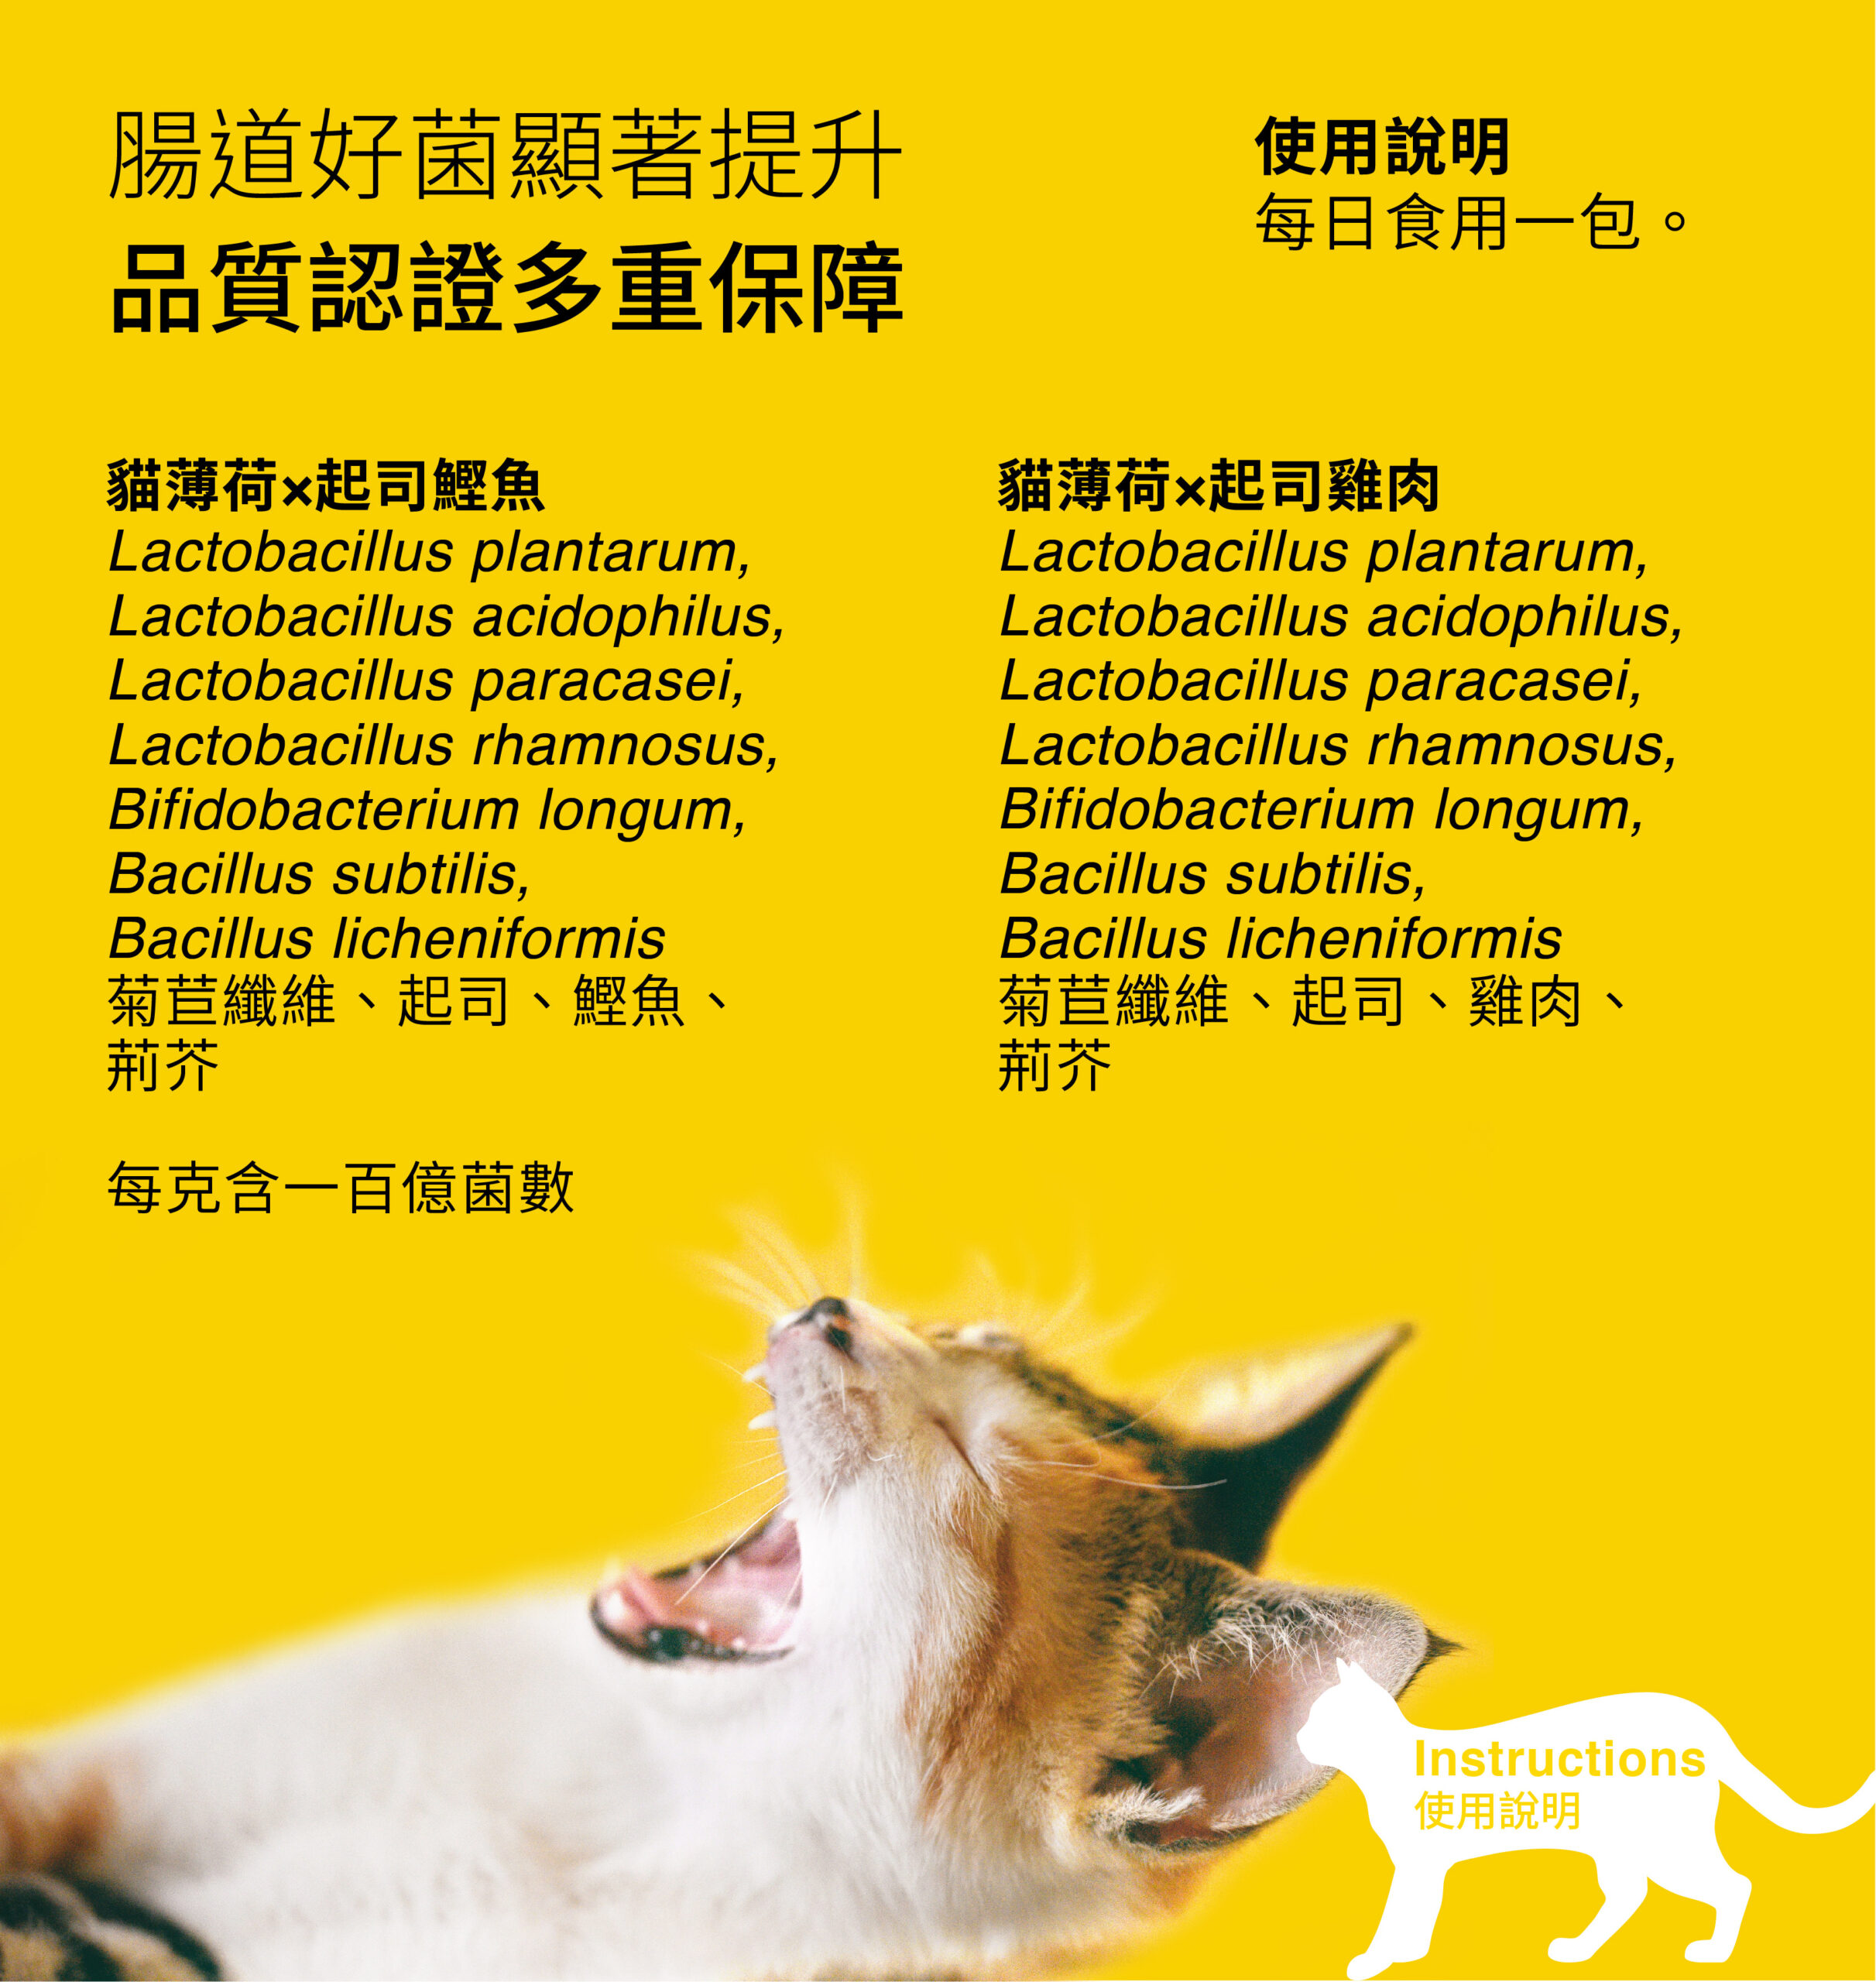 MONSTER BOOST-GUT CARE 貓腸胃保健益生菌、產品成分、起司、使用說明、雞肉